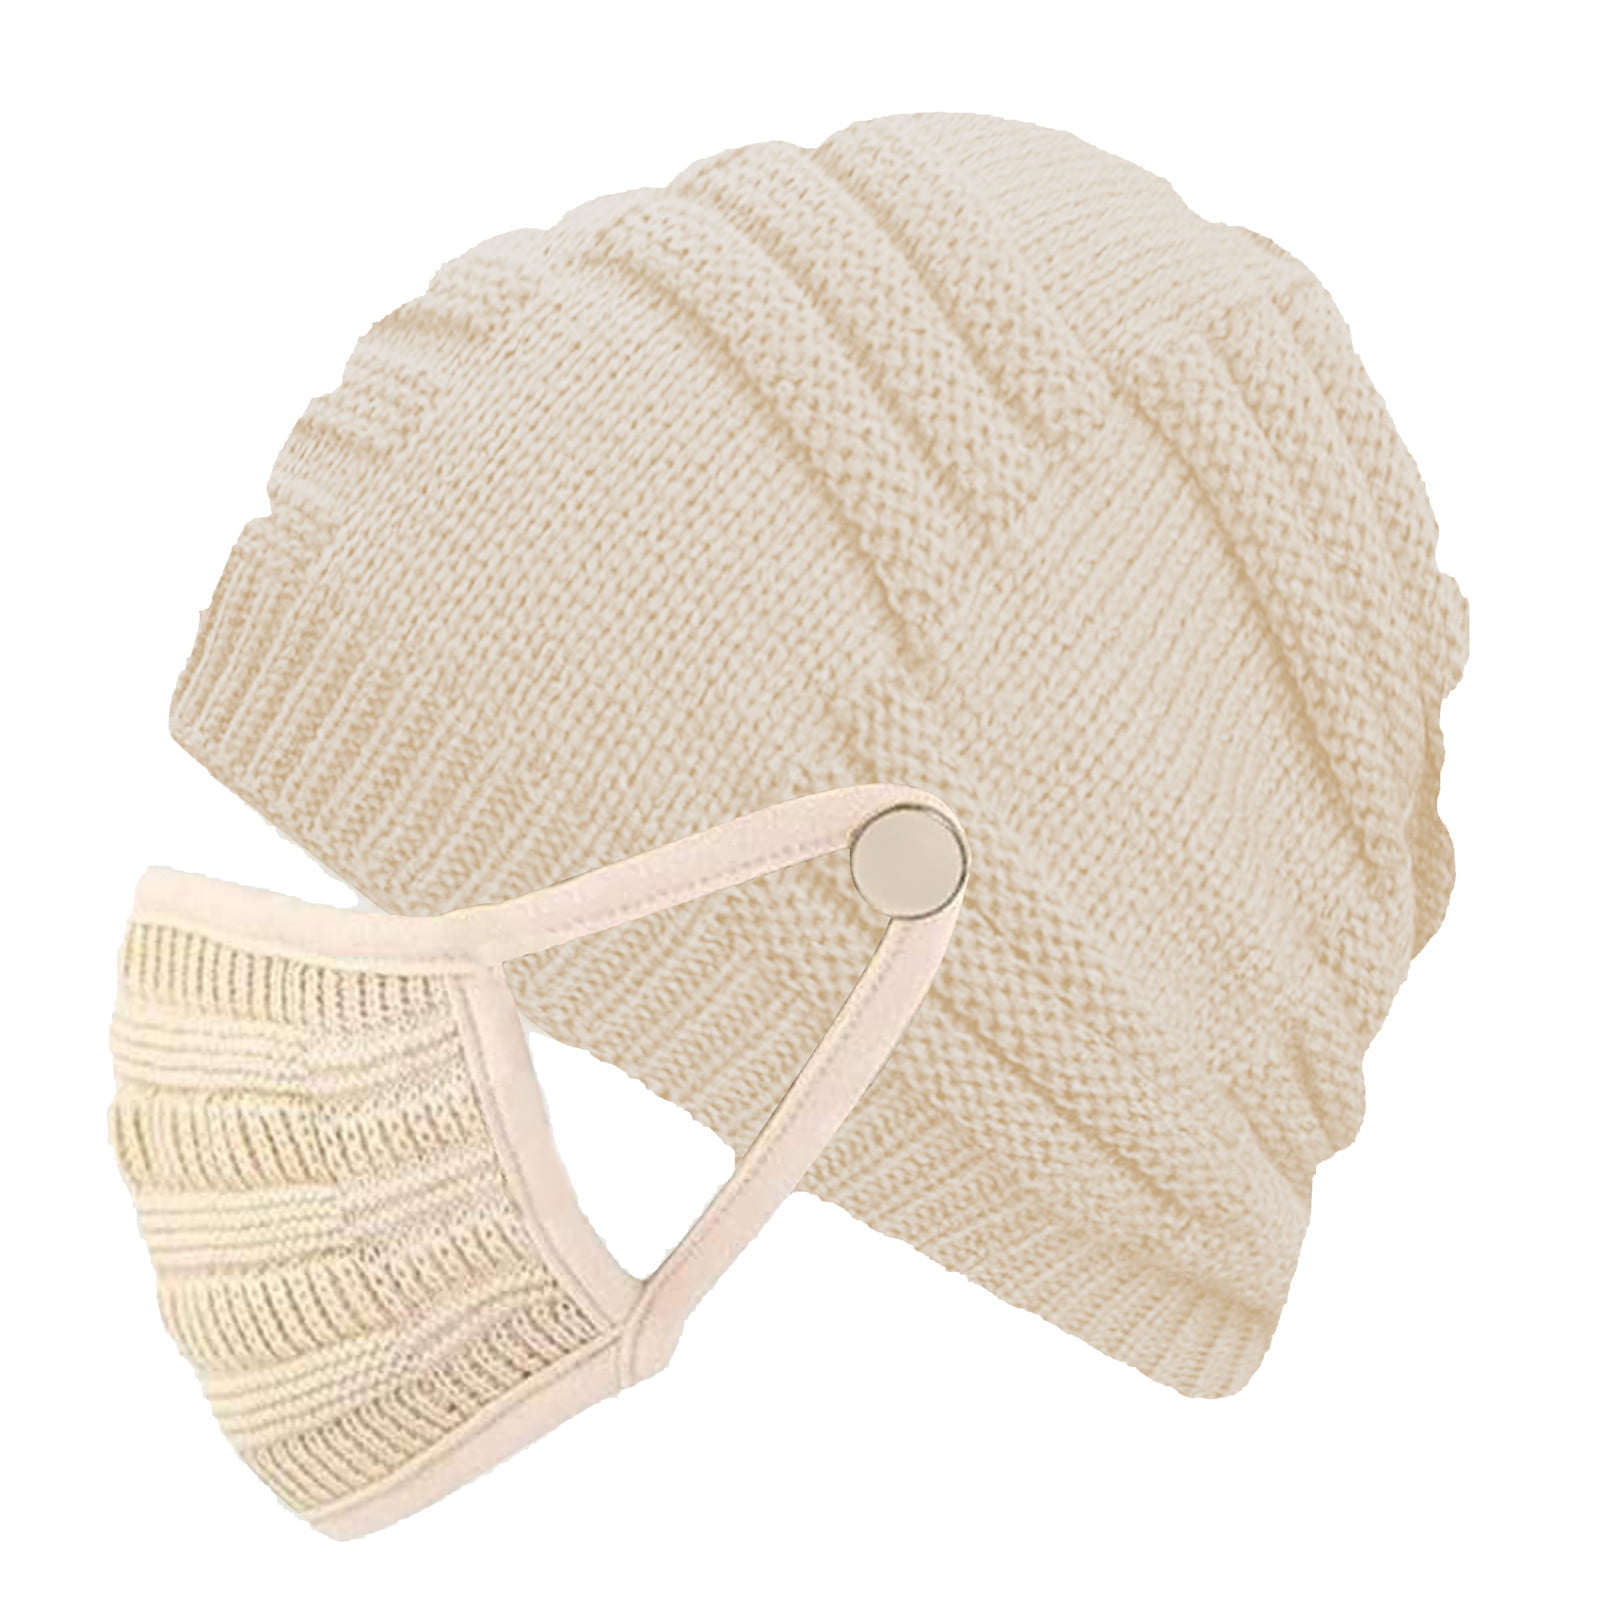 Warm Crochet Winter Wool Knit Ski Beanie Skull Slouchy Caps Hat+Mask Fashion Set 